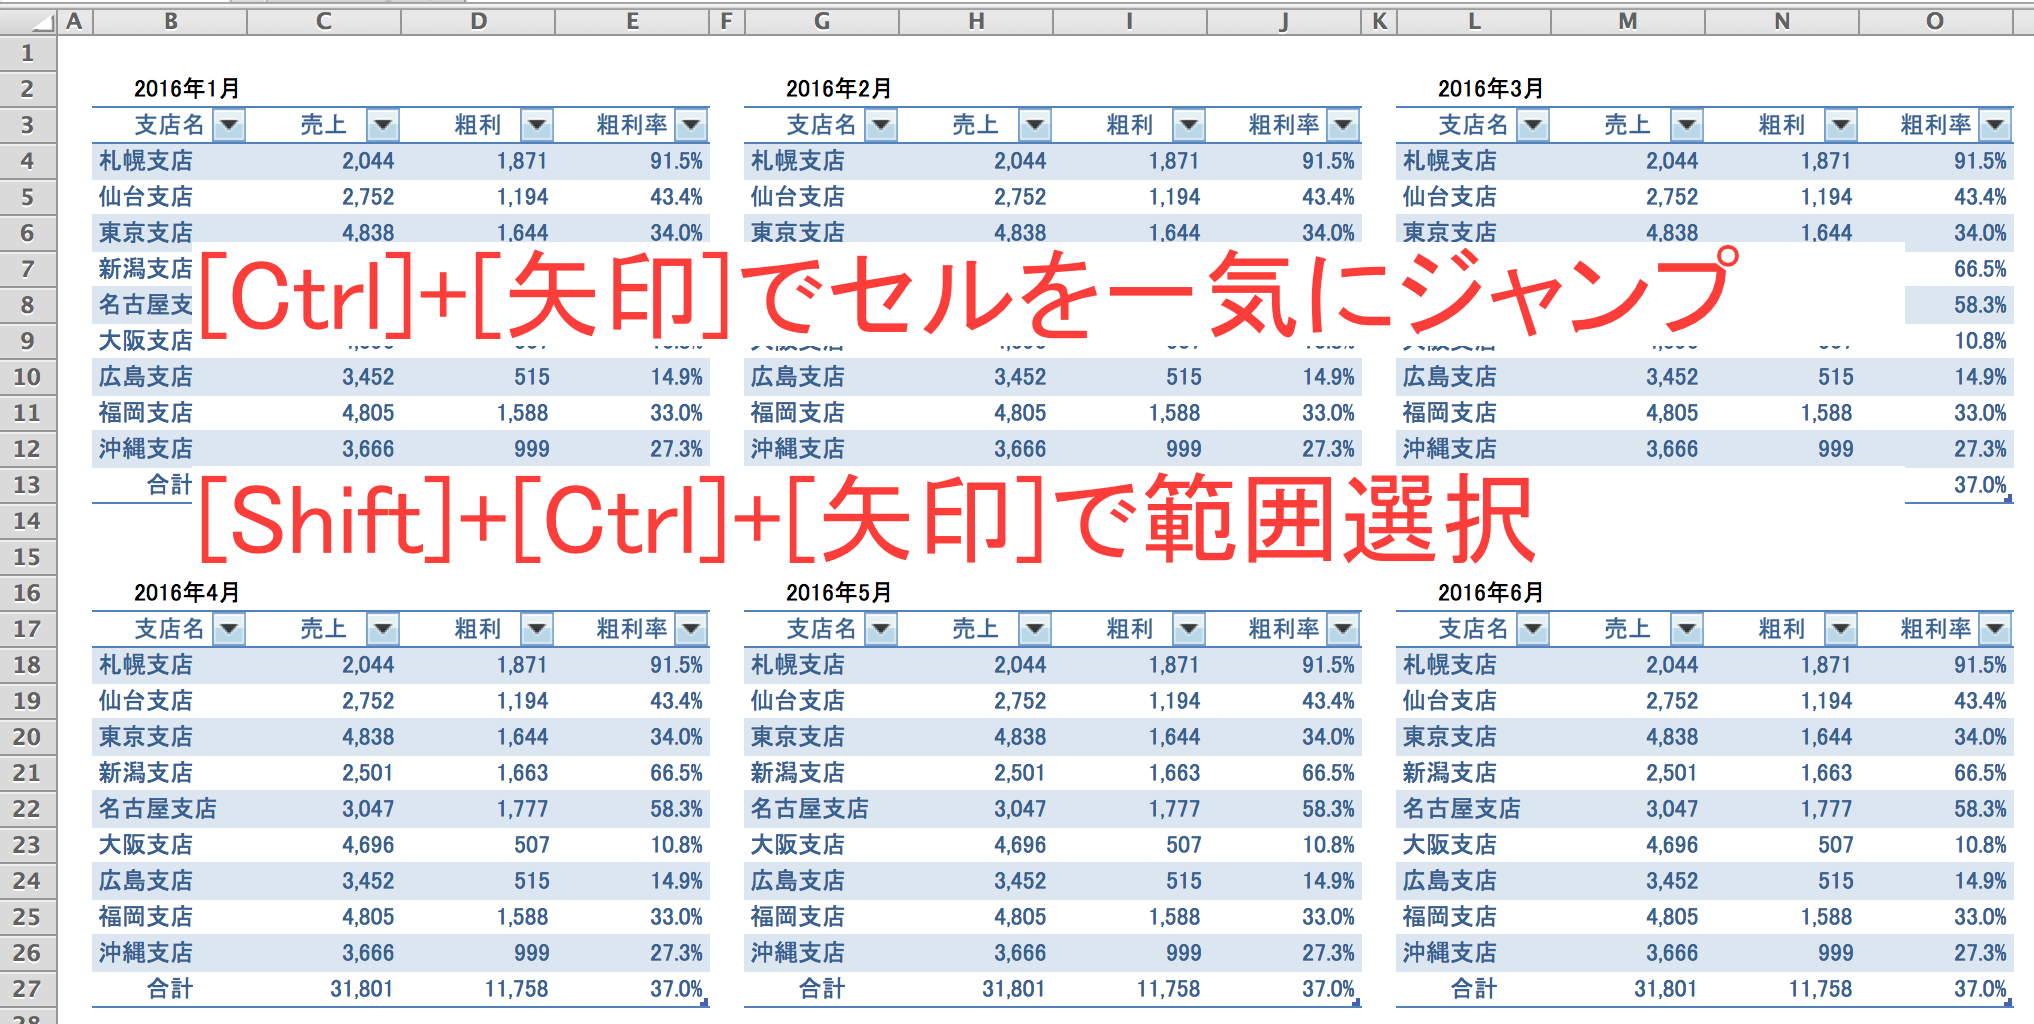 Excel Ctrl+矢印 ショートカット